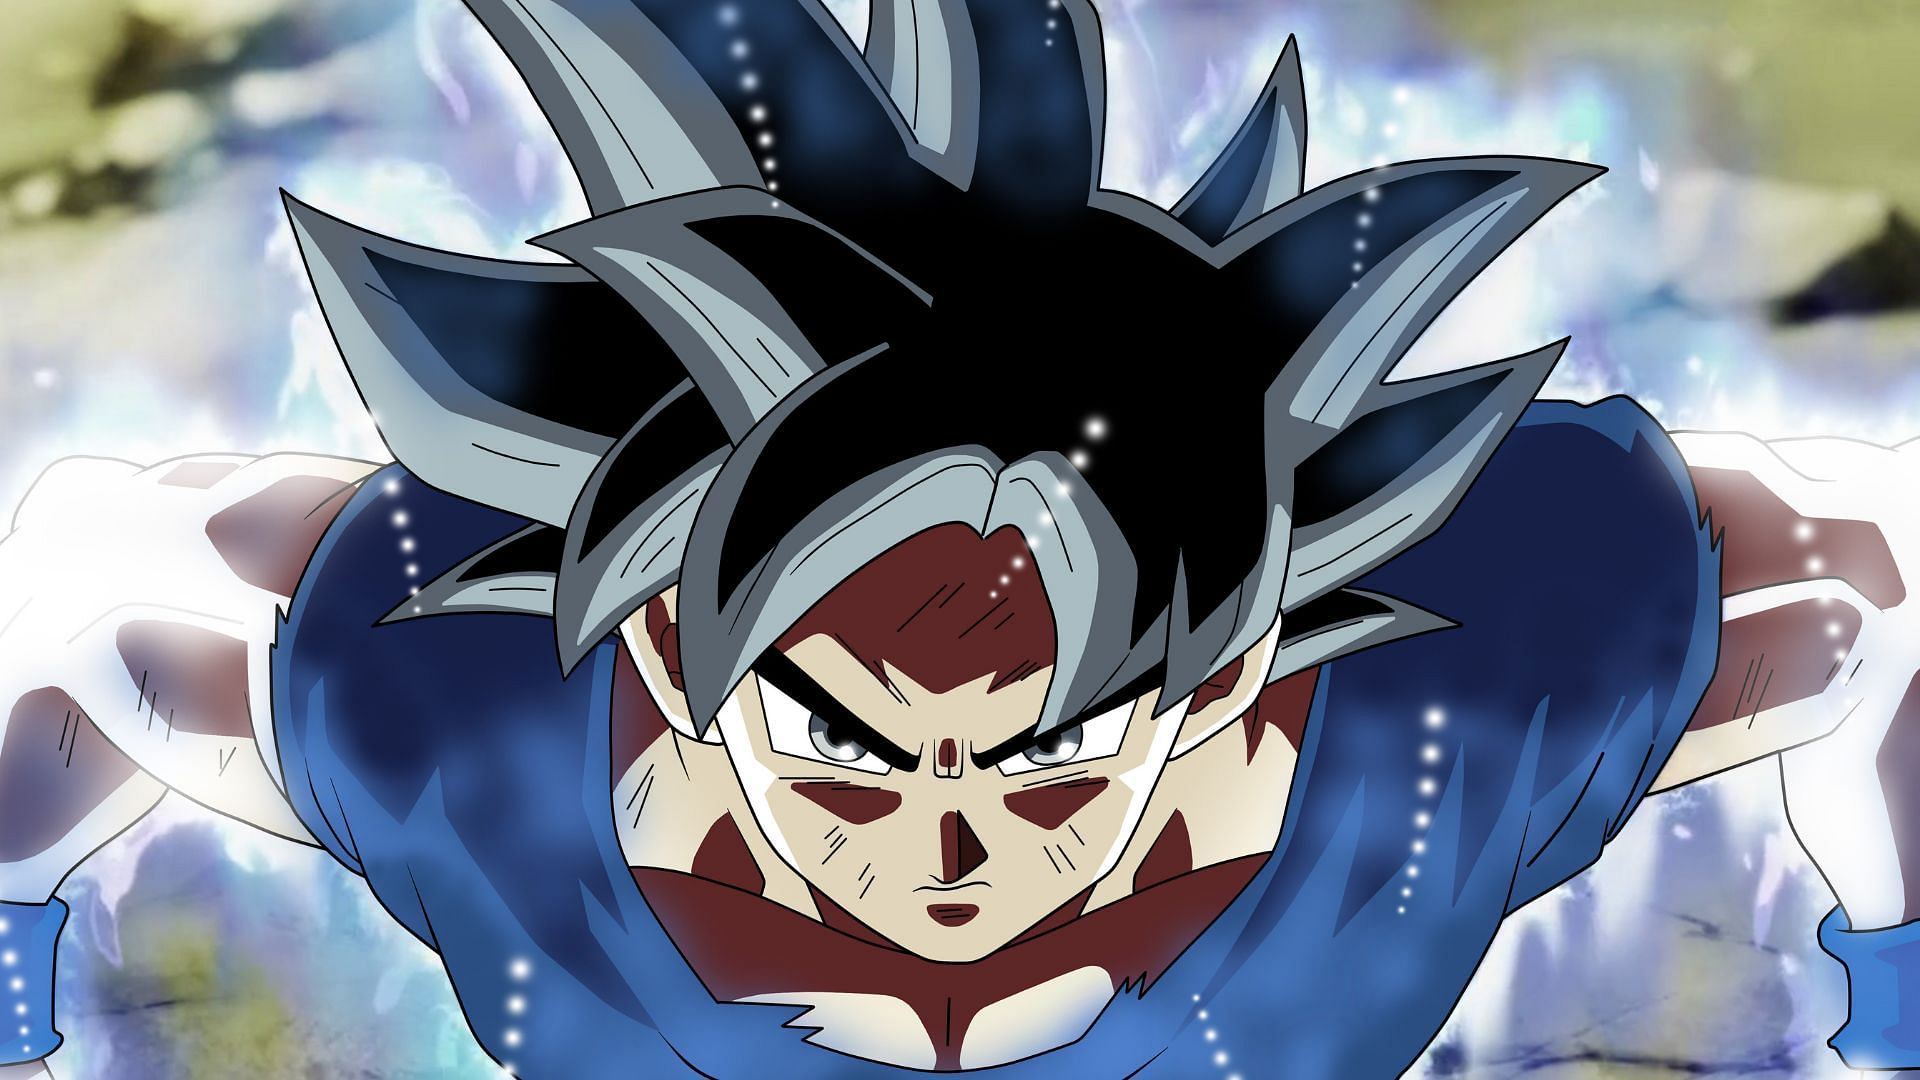 Goku from the Dragon Ball series (Image via Toei Animation)